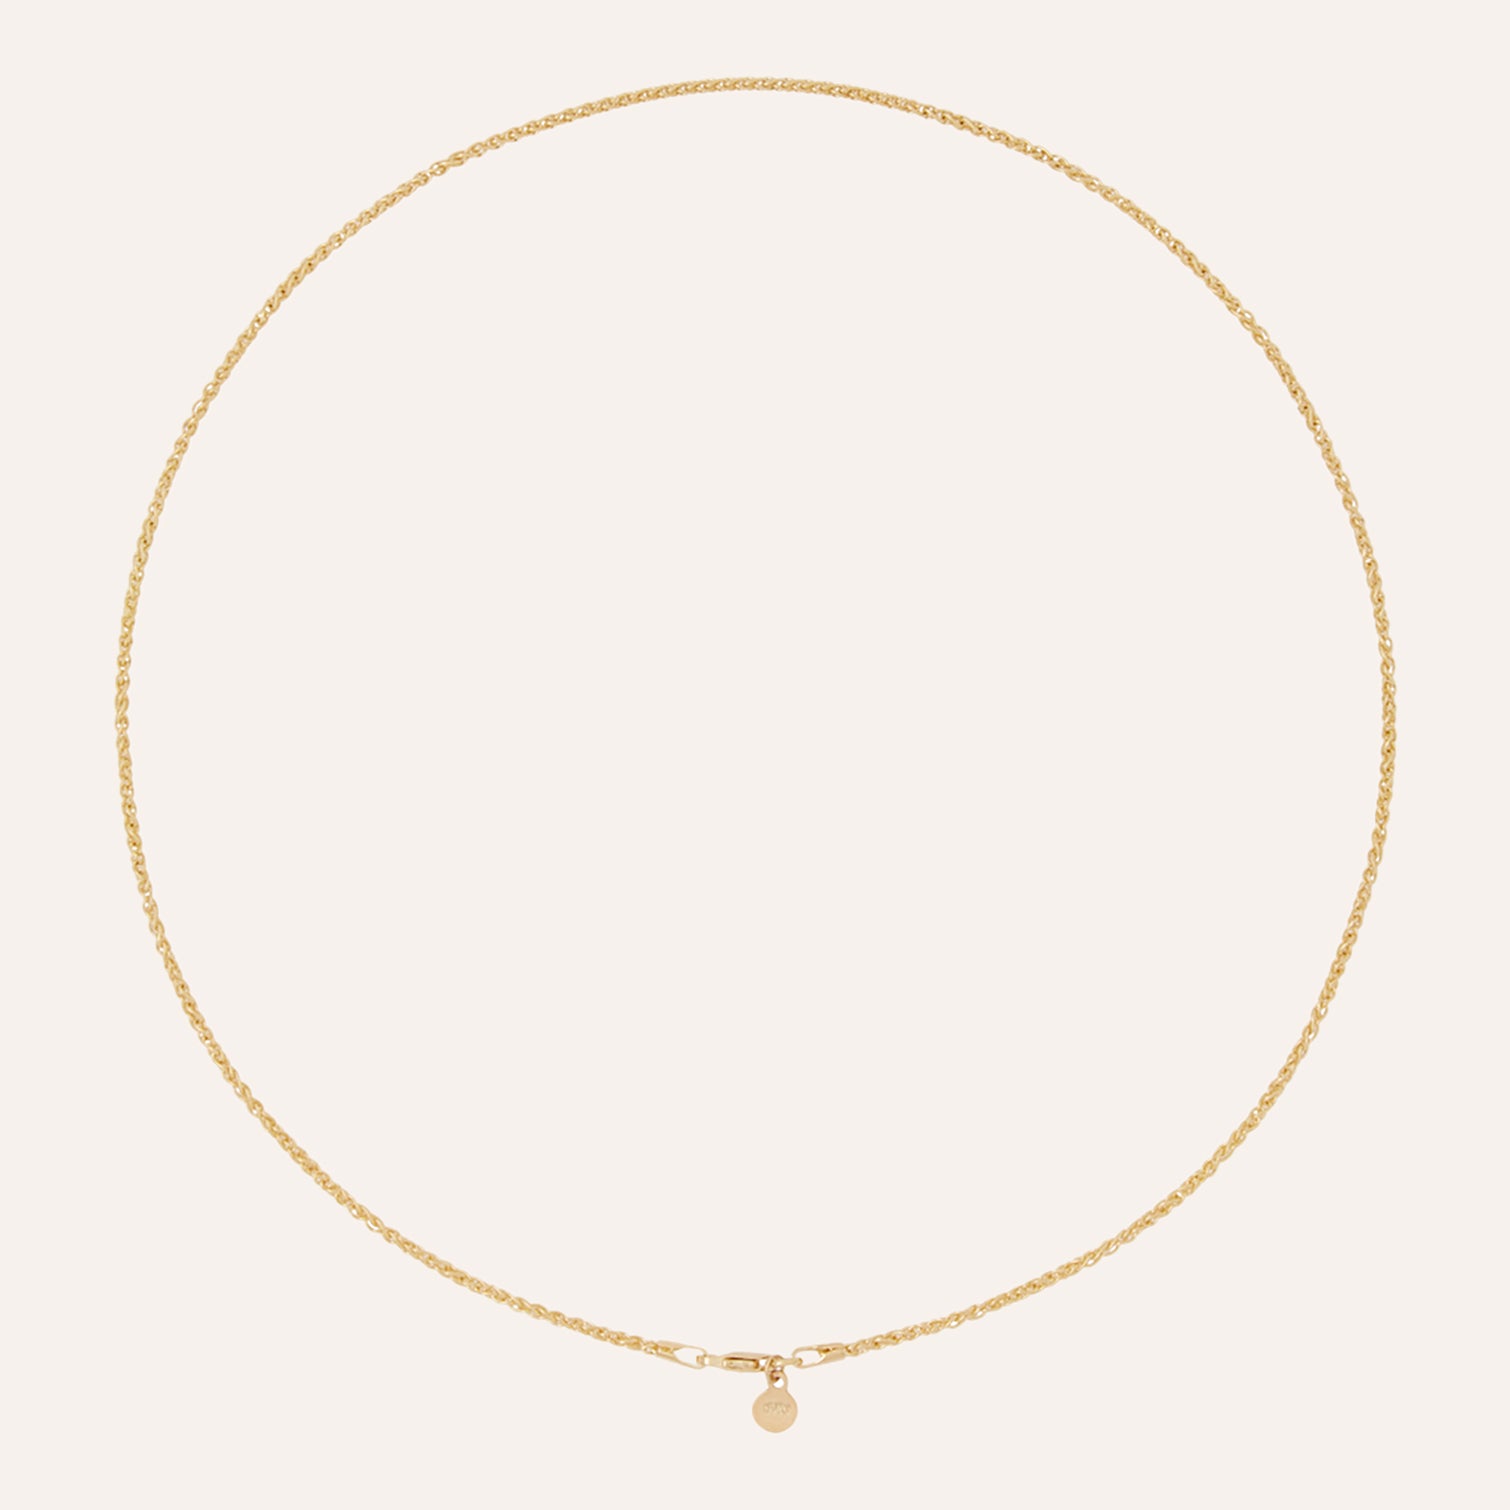 18K Round Wheat Necklace Chain, 16"L